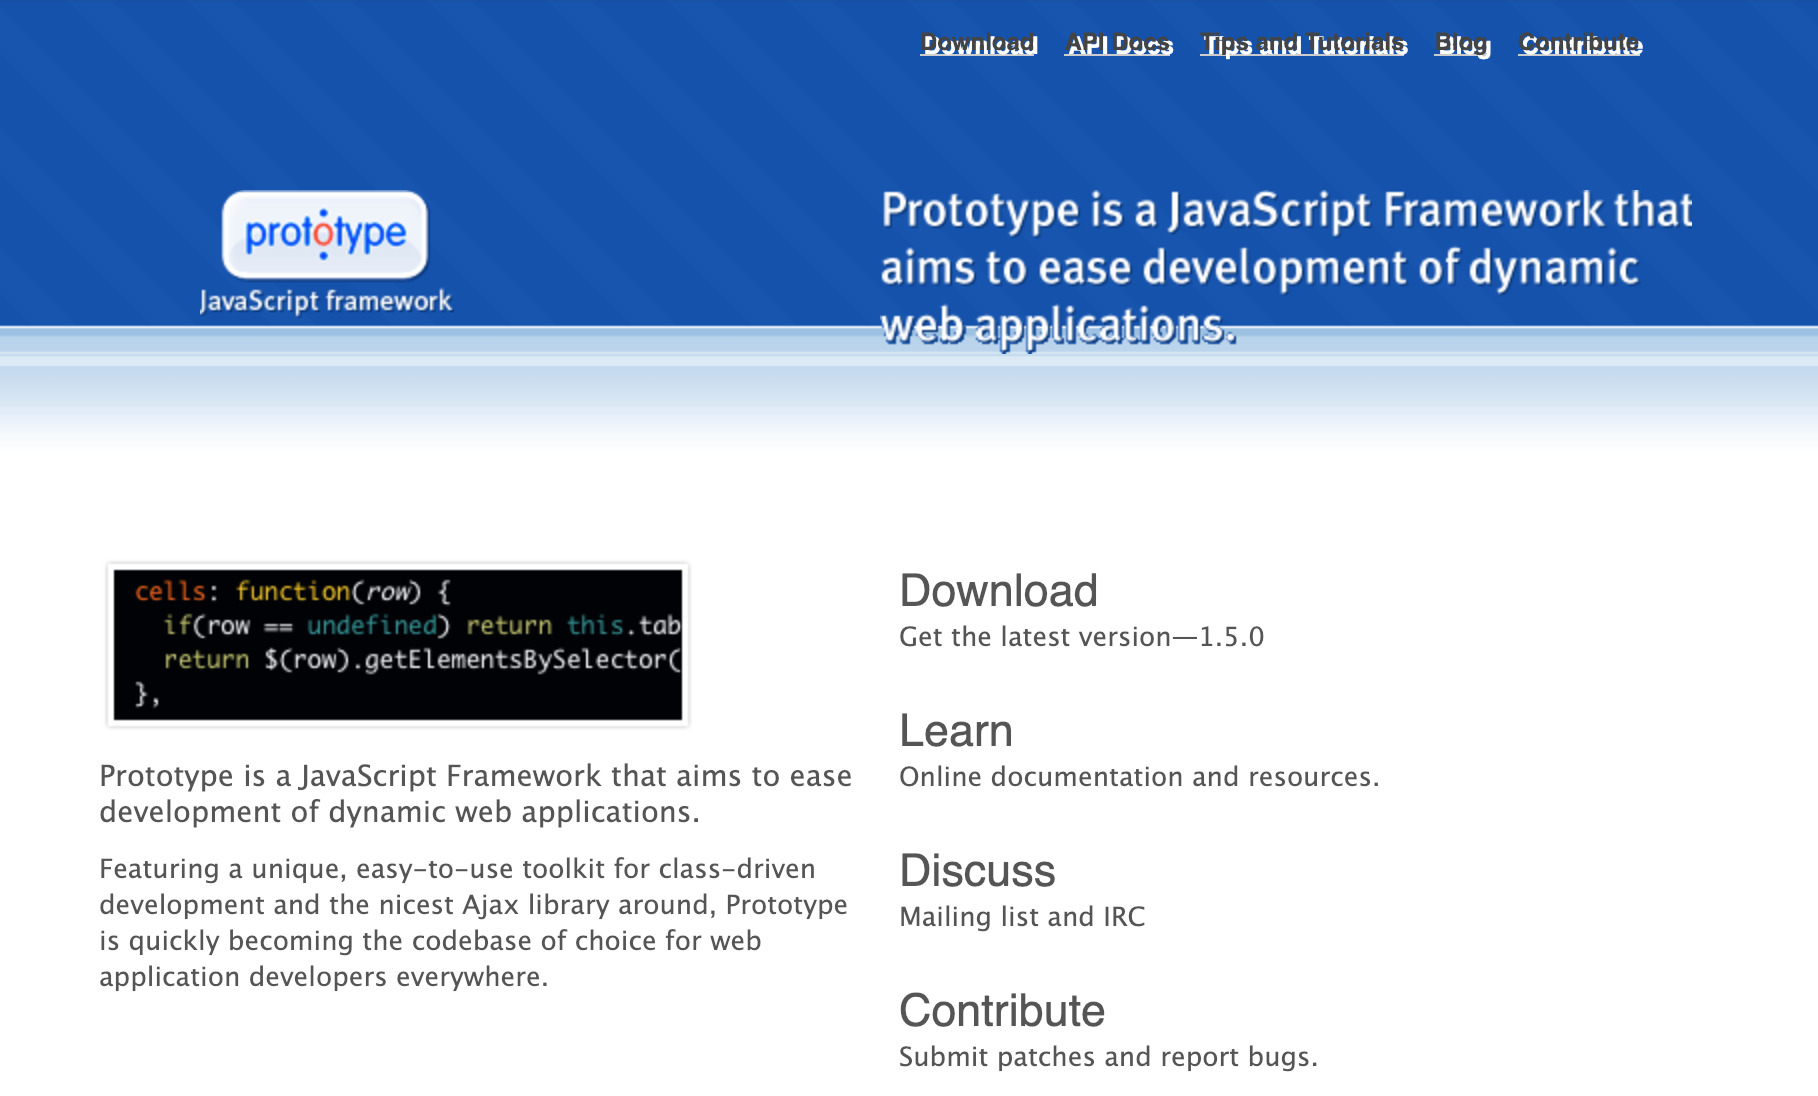 A screenshot of the Prototype website.